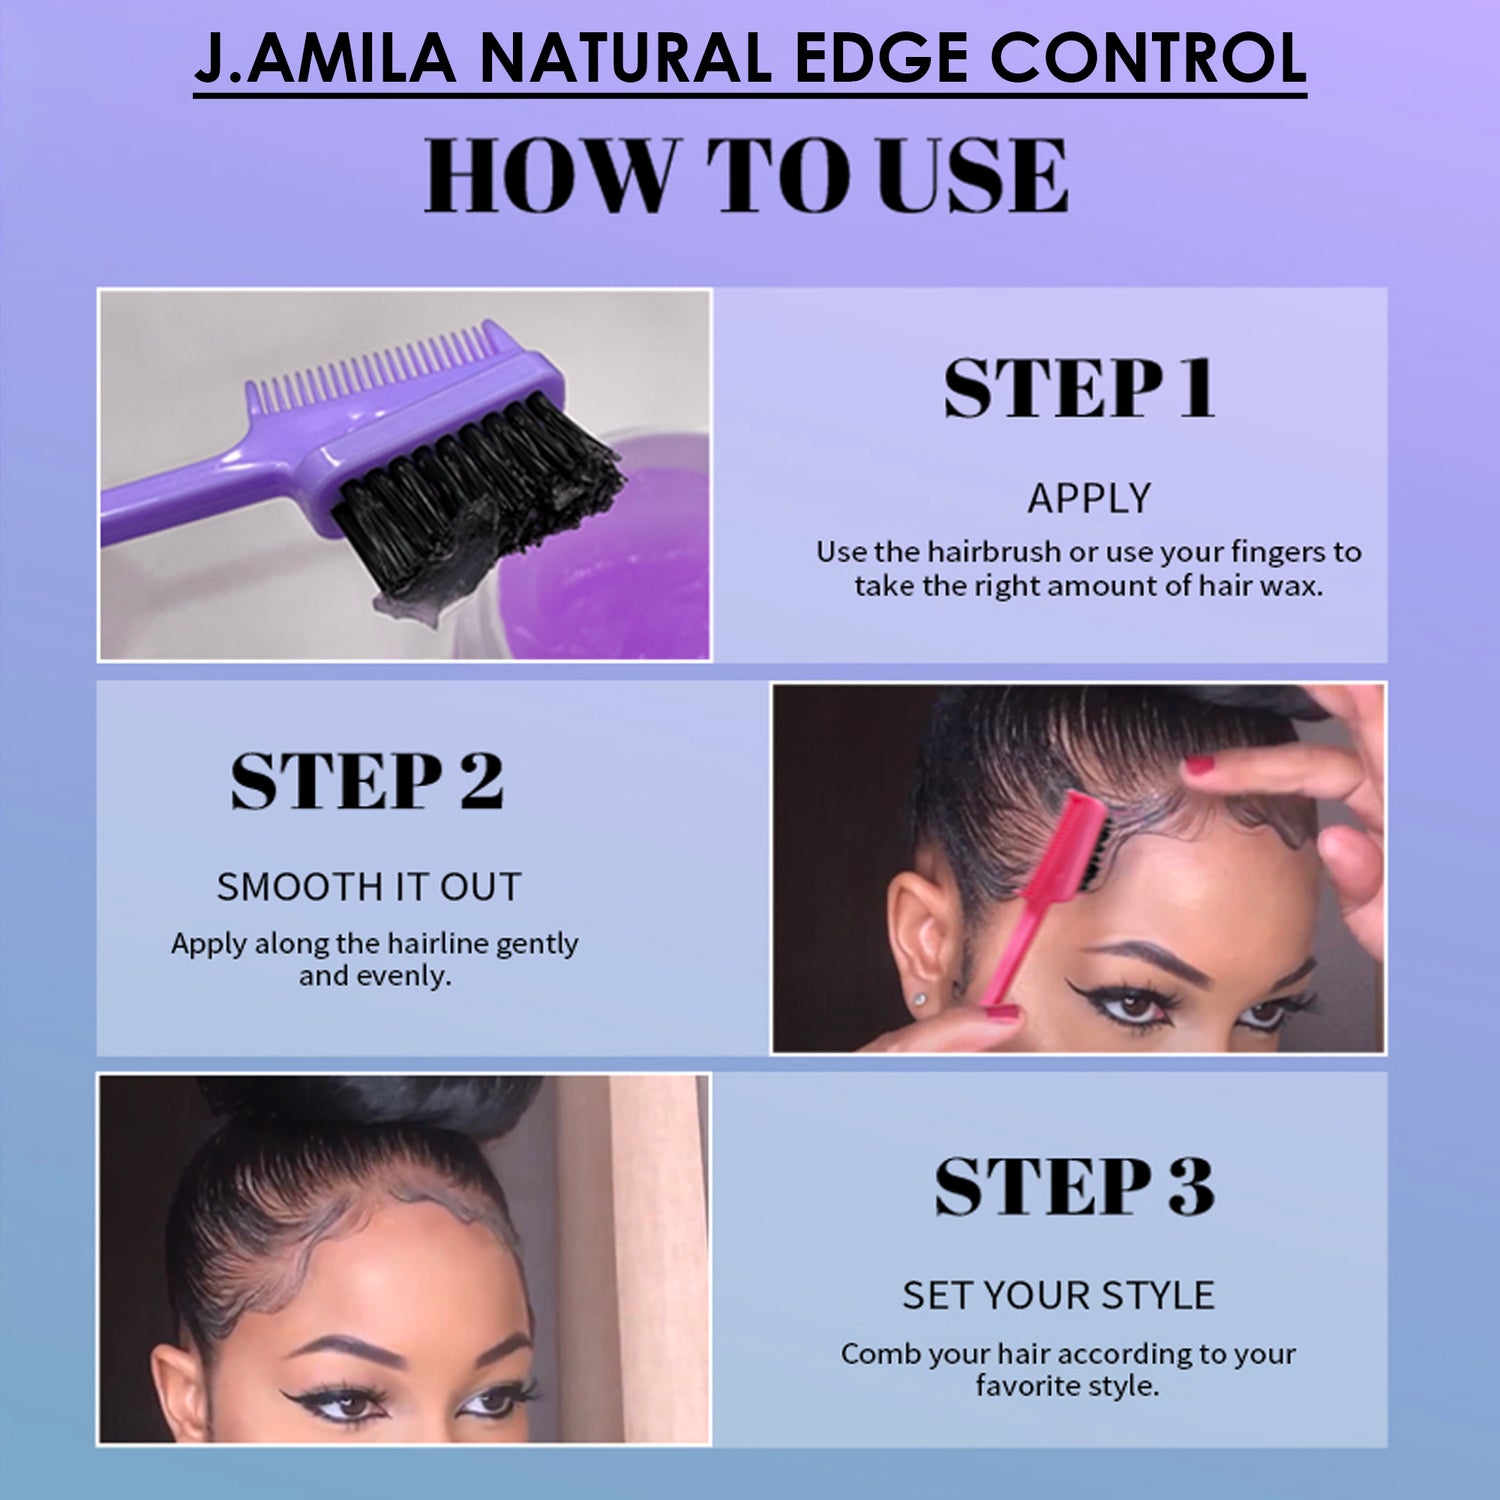 J. AMILA Naturally Pure Edge Control